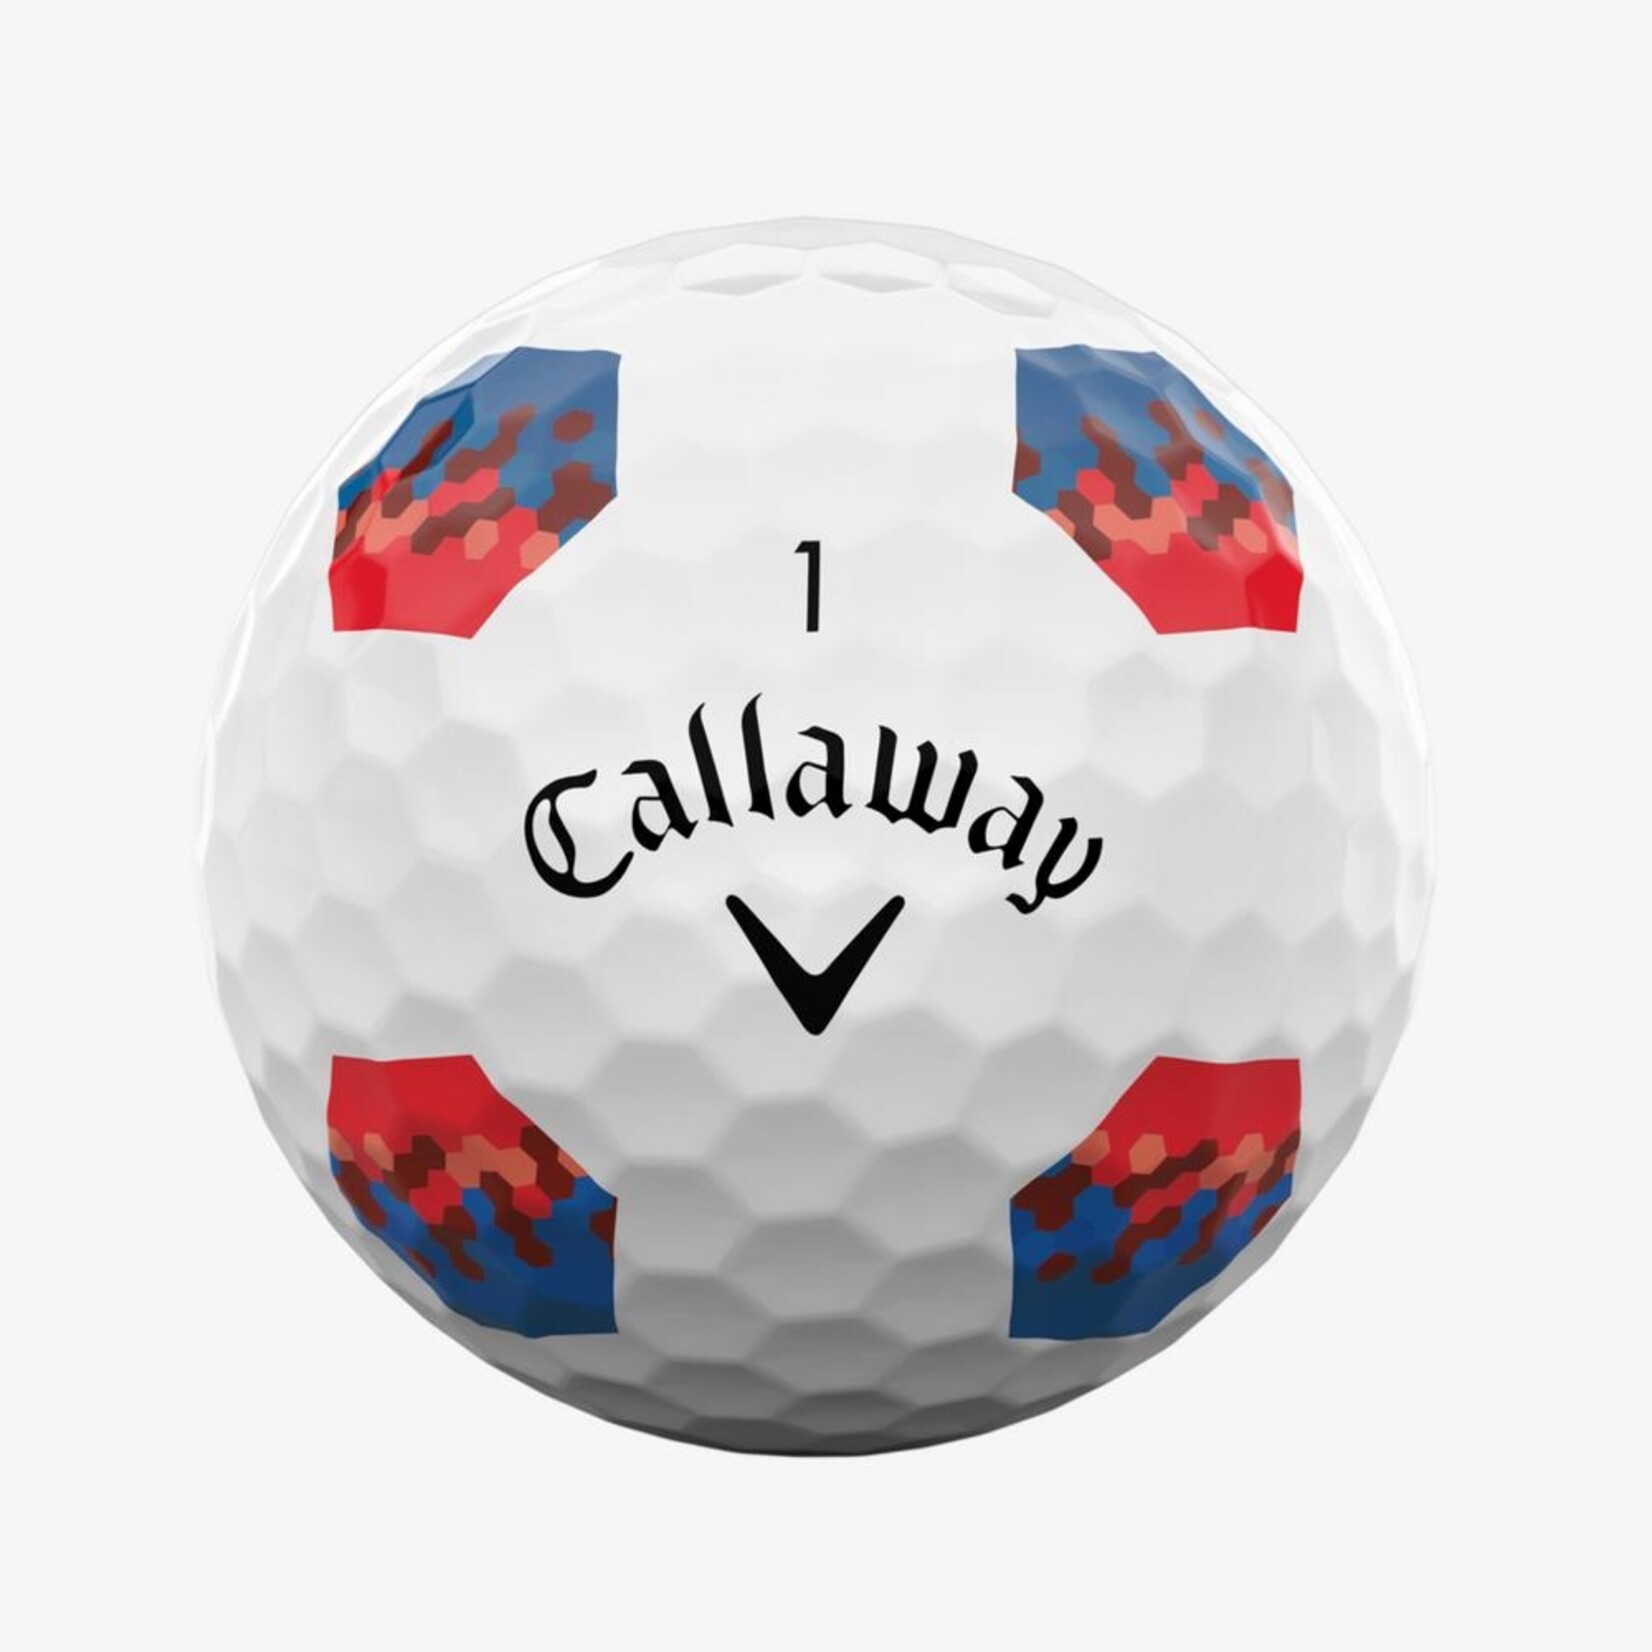 Callaway Chrome Soft Red & Blue TruTrack Golf Balls